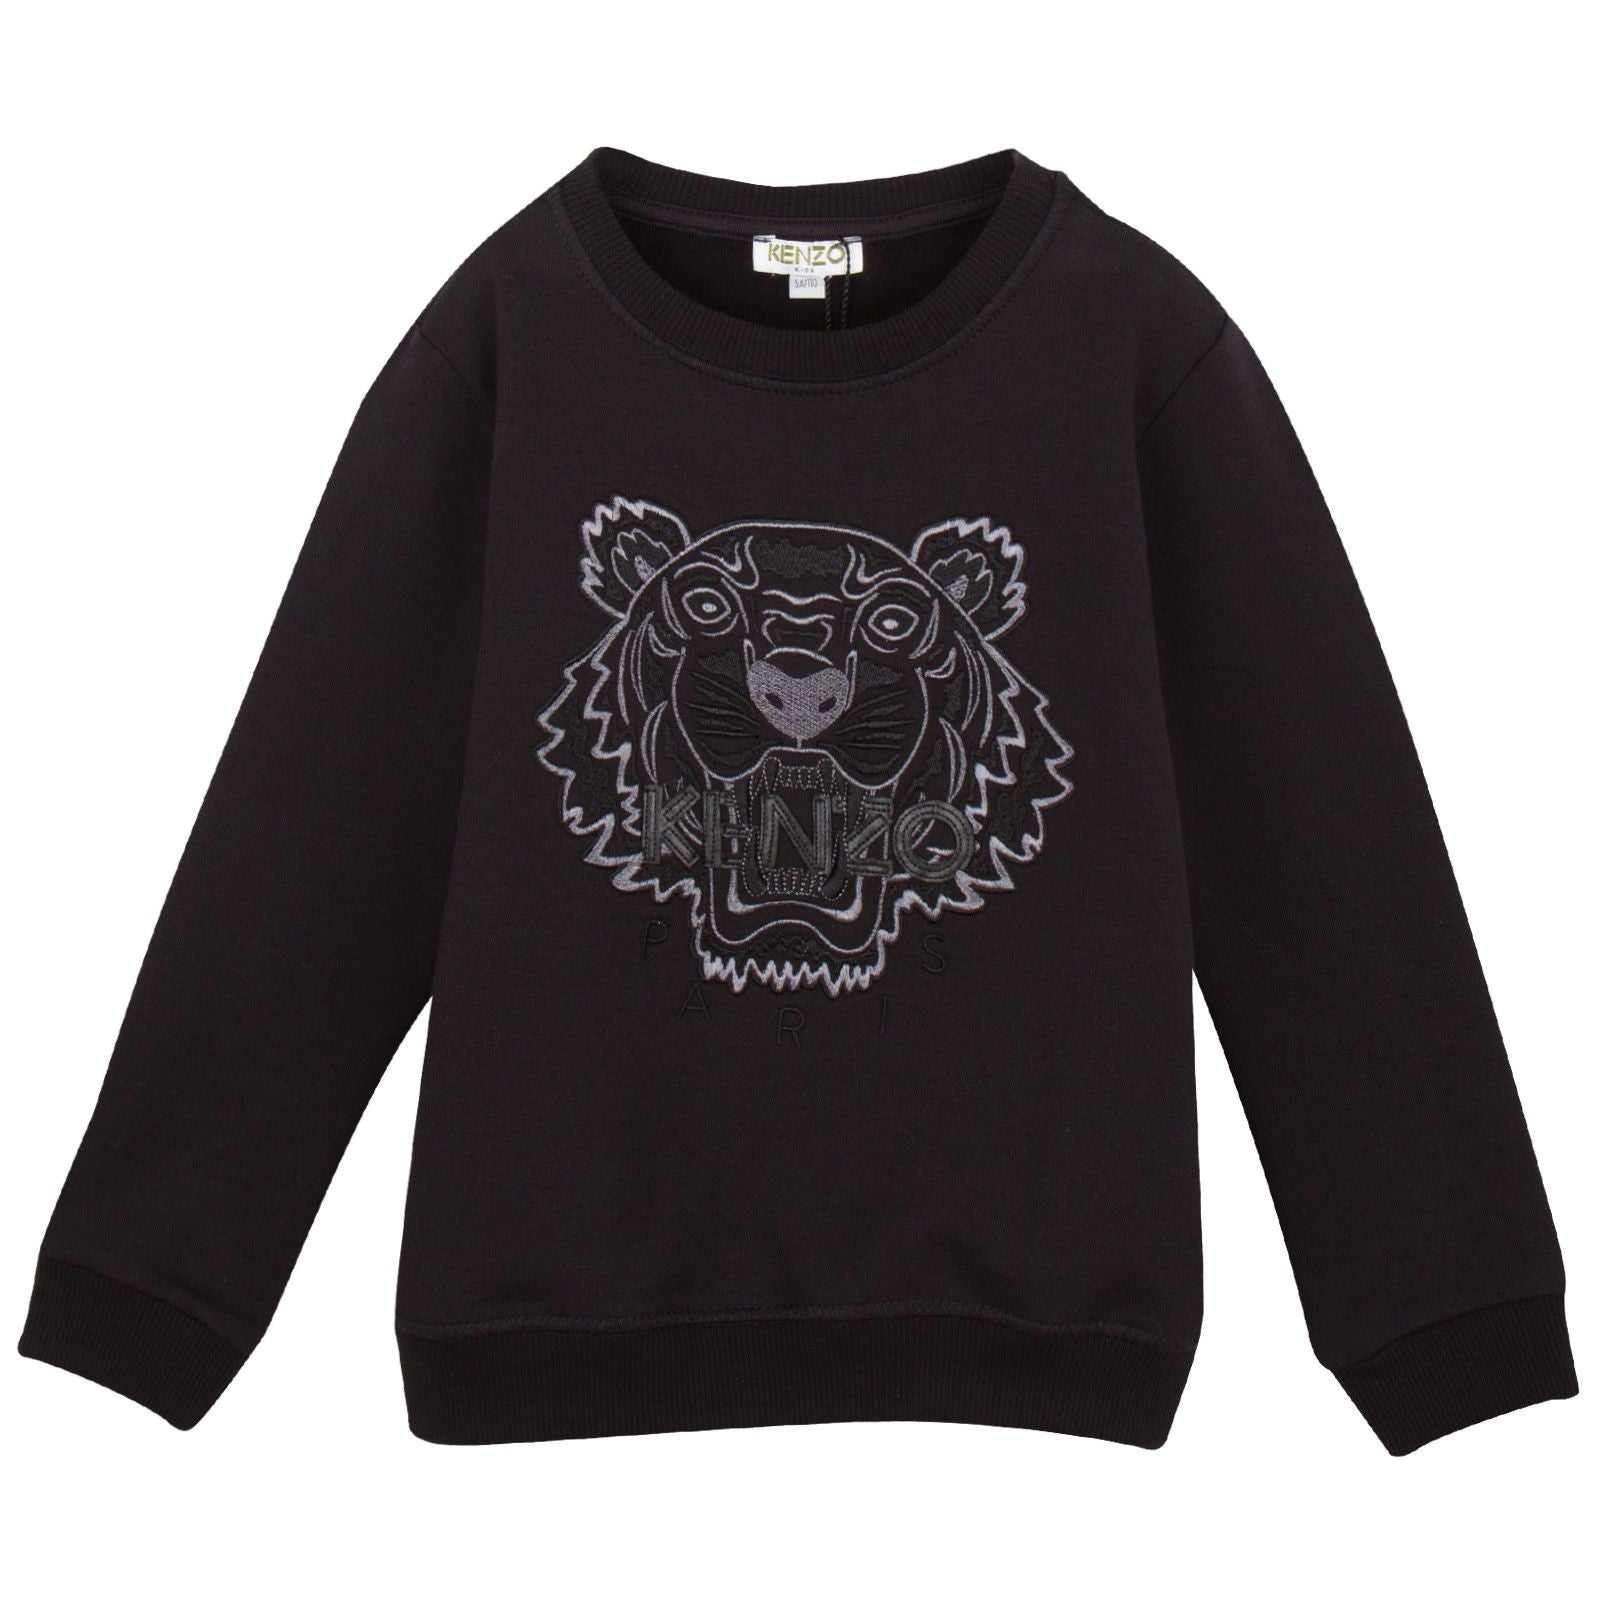 Boys Black Tiger Embroidered Jersey Sweatshirt - CÉMAROSE | Children's Fashion Store - 1